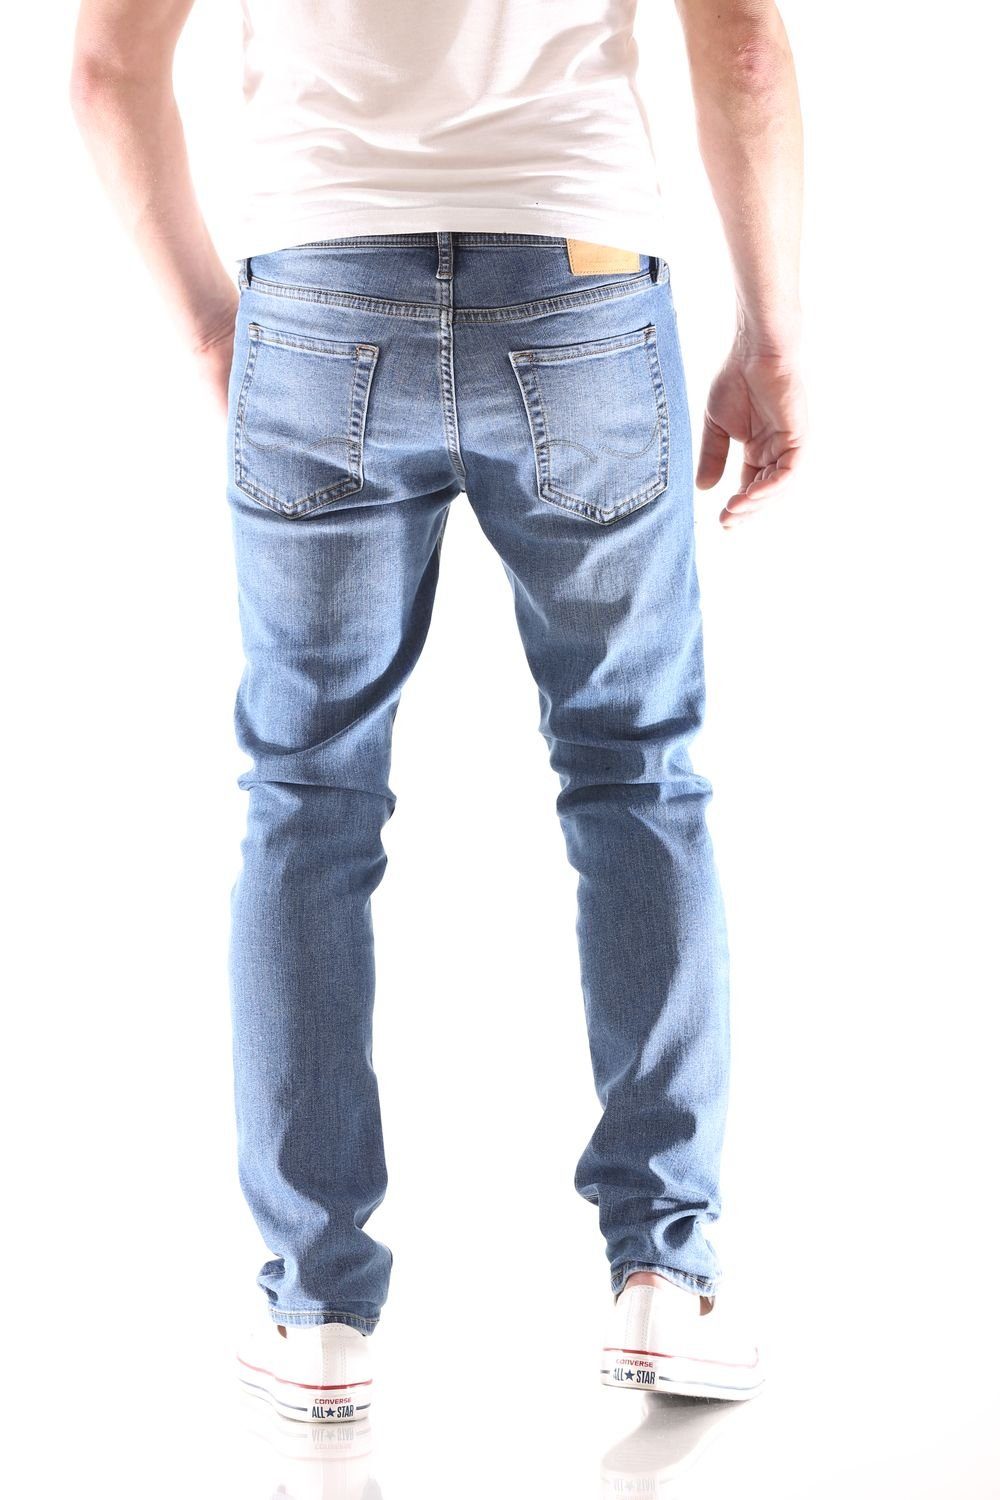 Fit & Medium & Jack Blue Jones Jones Jeans Slim-fit-Jeans Herren Slim Glenn Jack Original